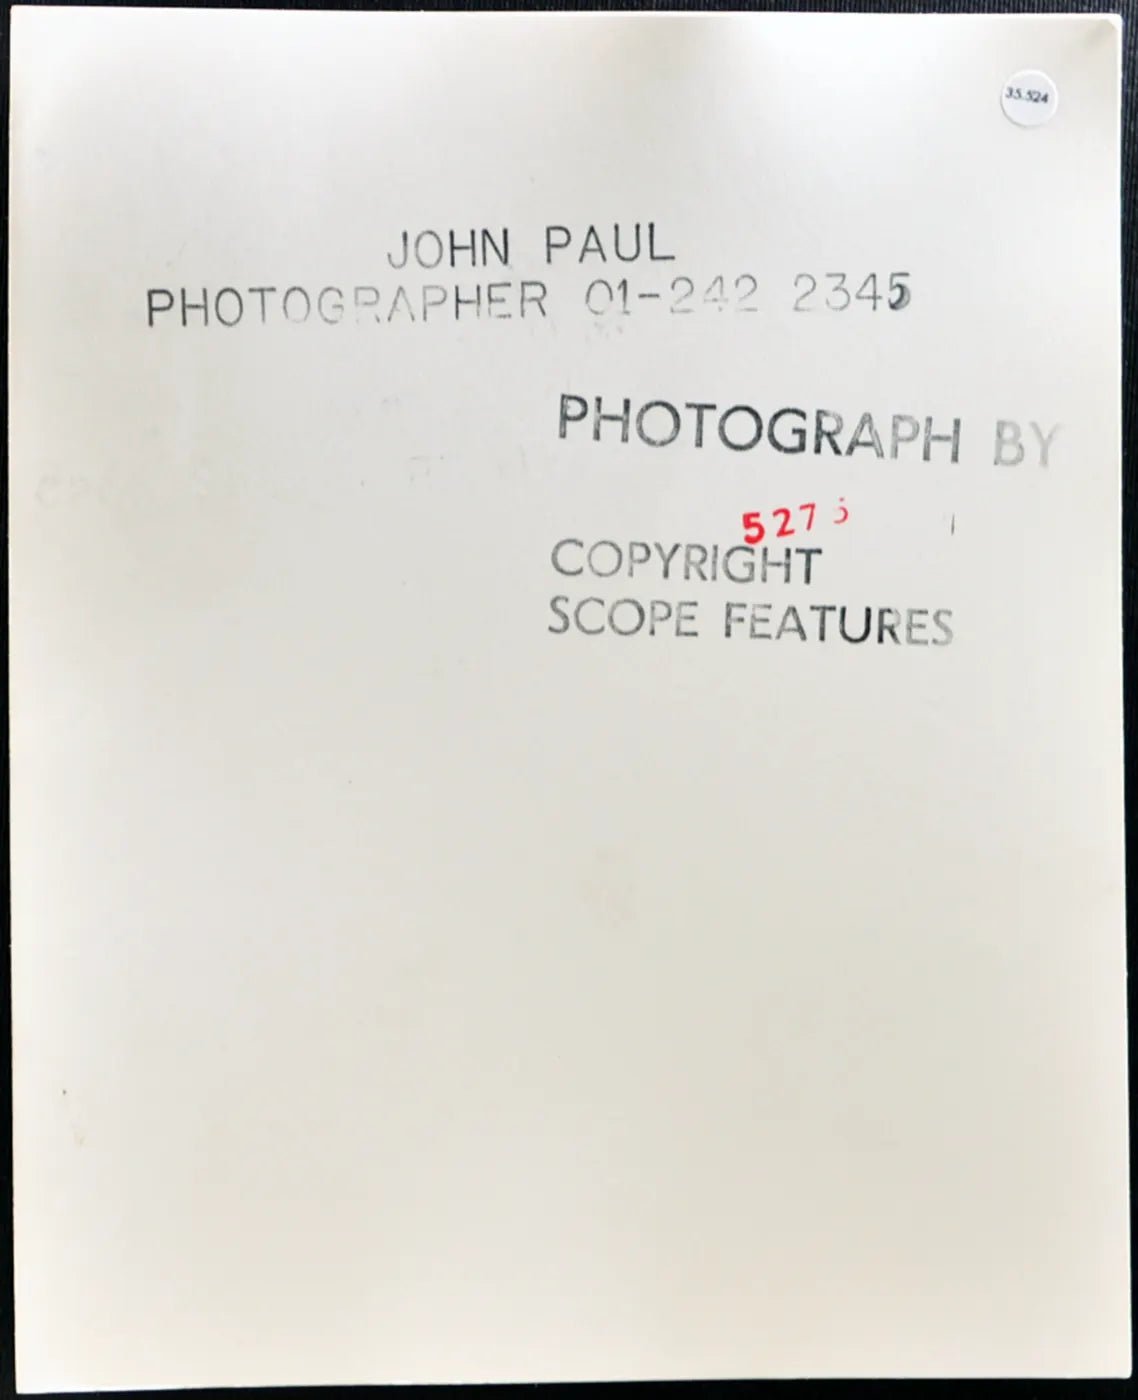 Gillian Duxbury Modella anni 80 Ft 35524 - Stampa 20x25 cm - Farabola Stampa ai sali d'argento